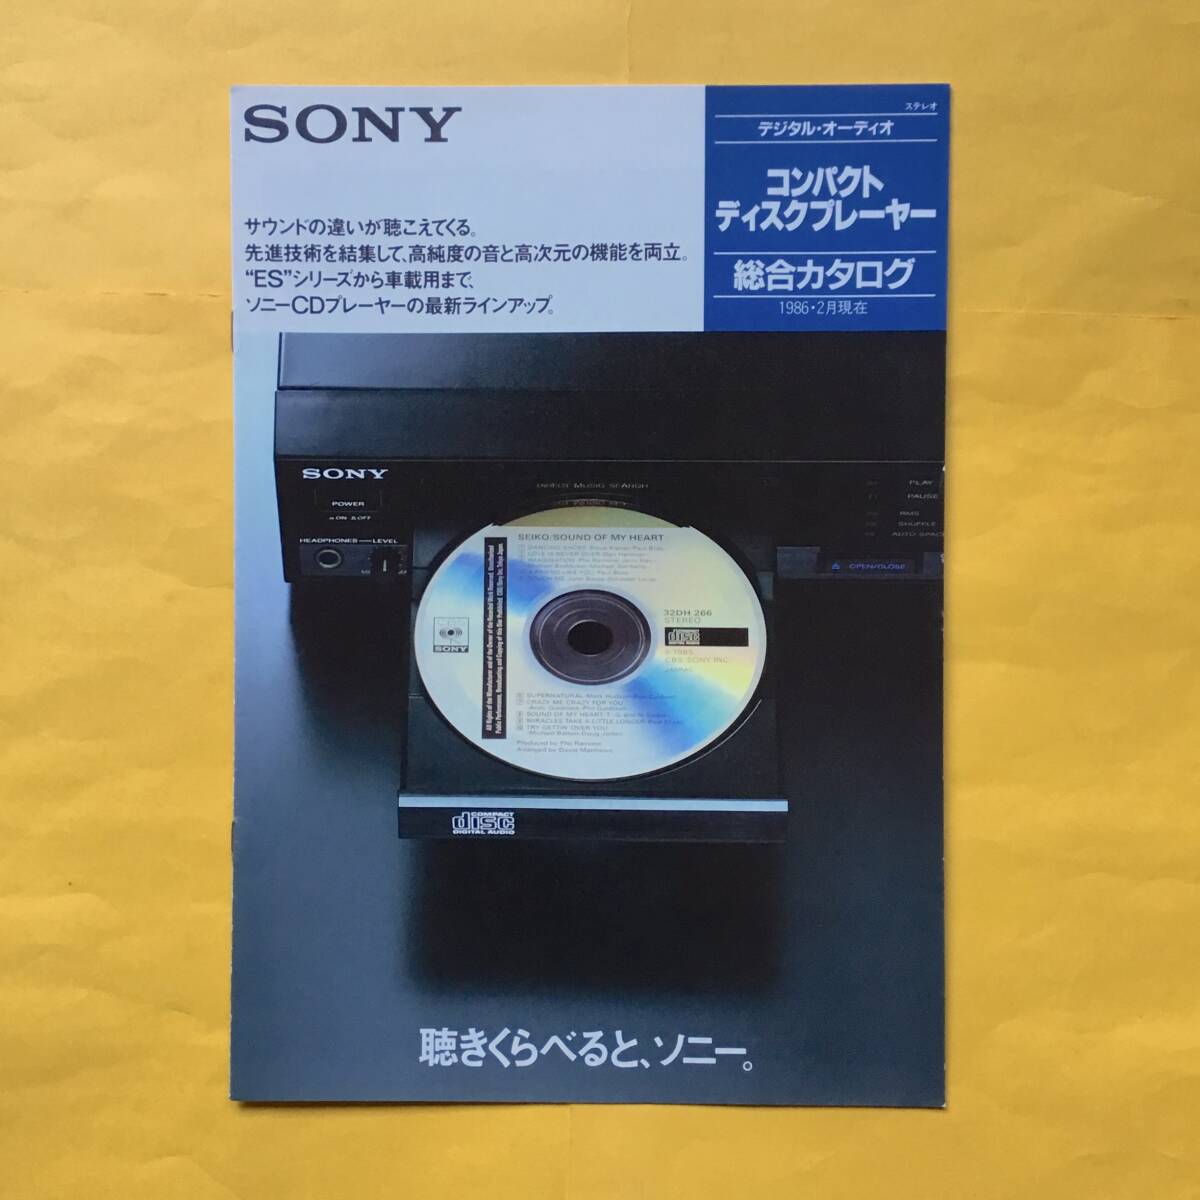 SONY コンパクトディスクプレーヤー【'86.2 総合カタログ】（ソニー 昭和61年 希少 コレクション）_画像1